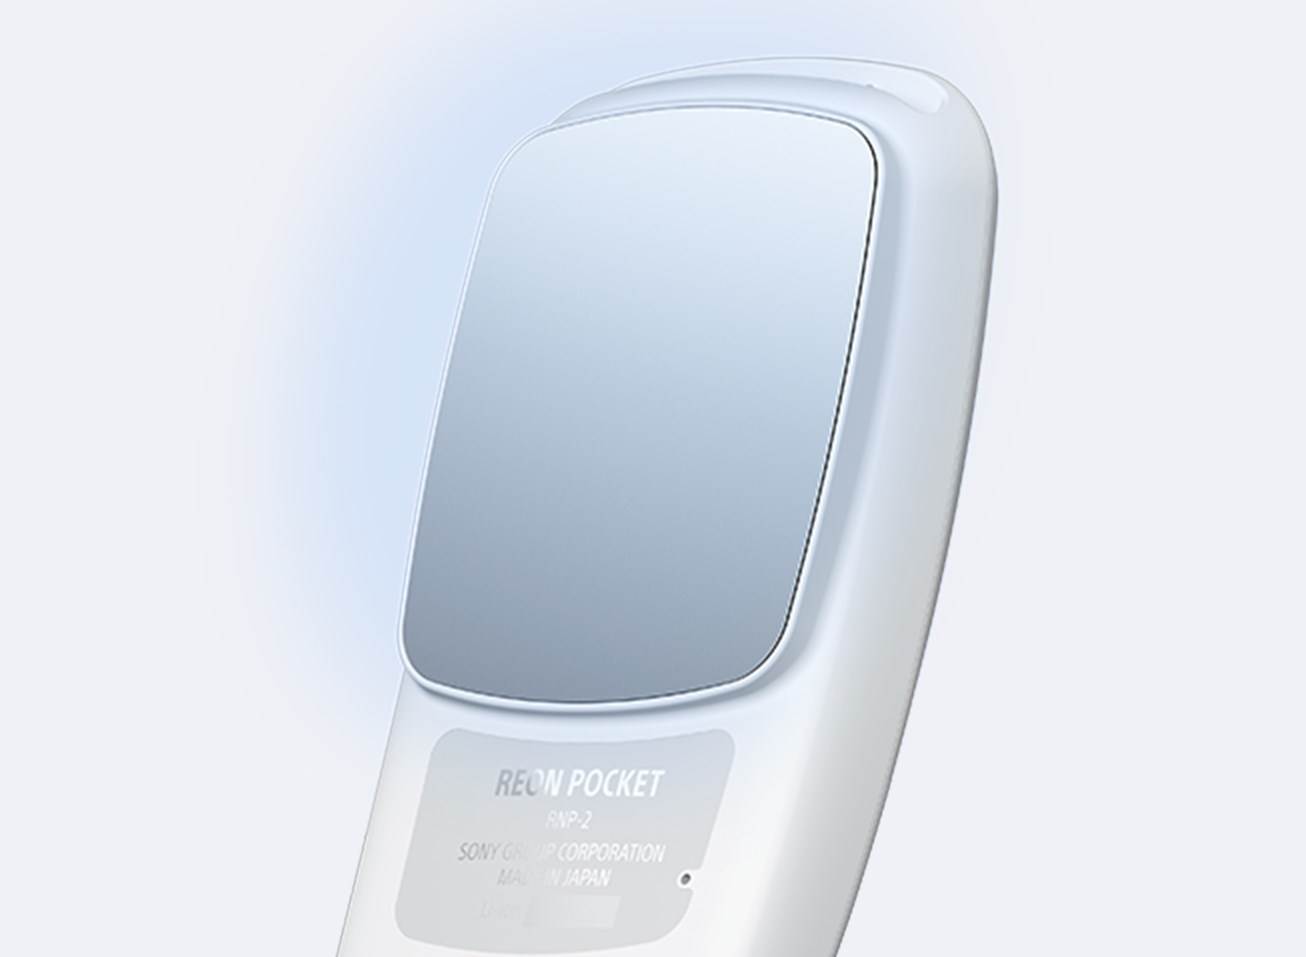  Reon Pocket 2 uređaj 